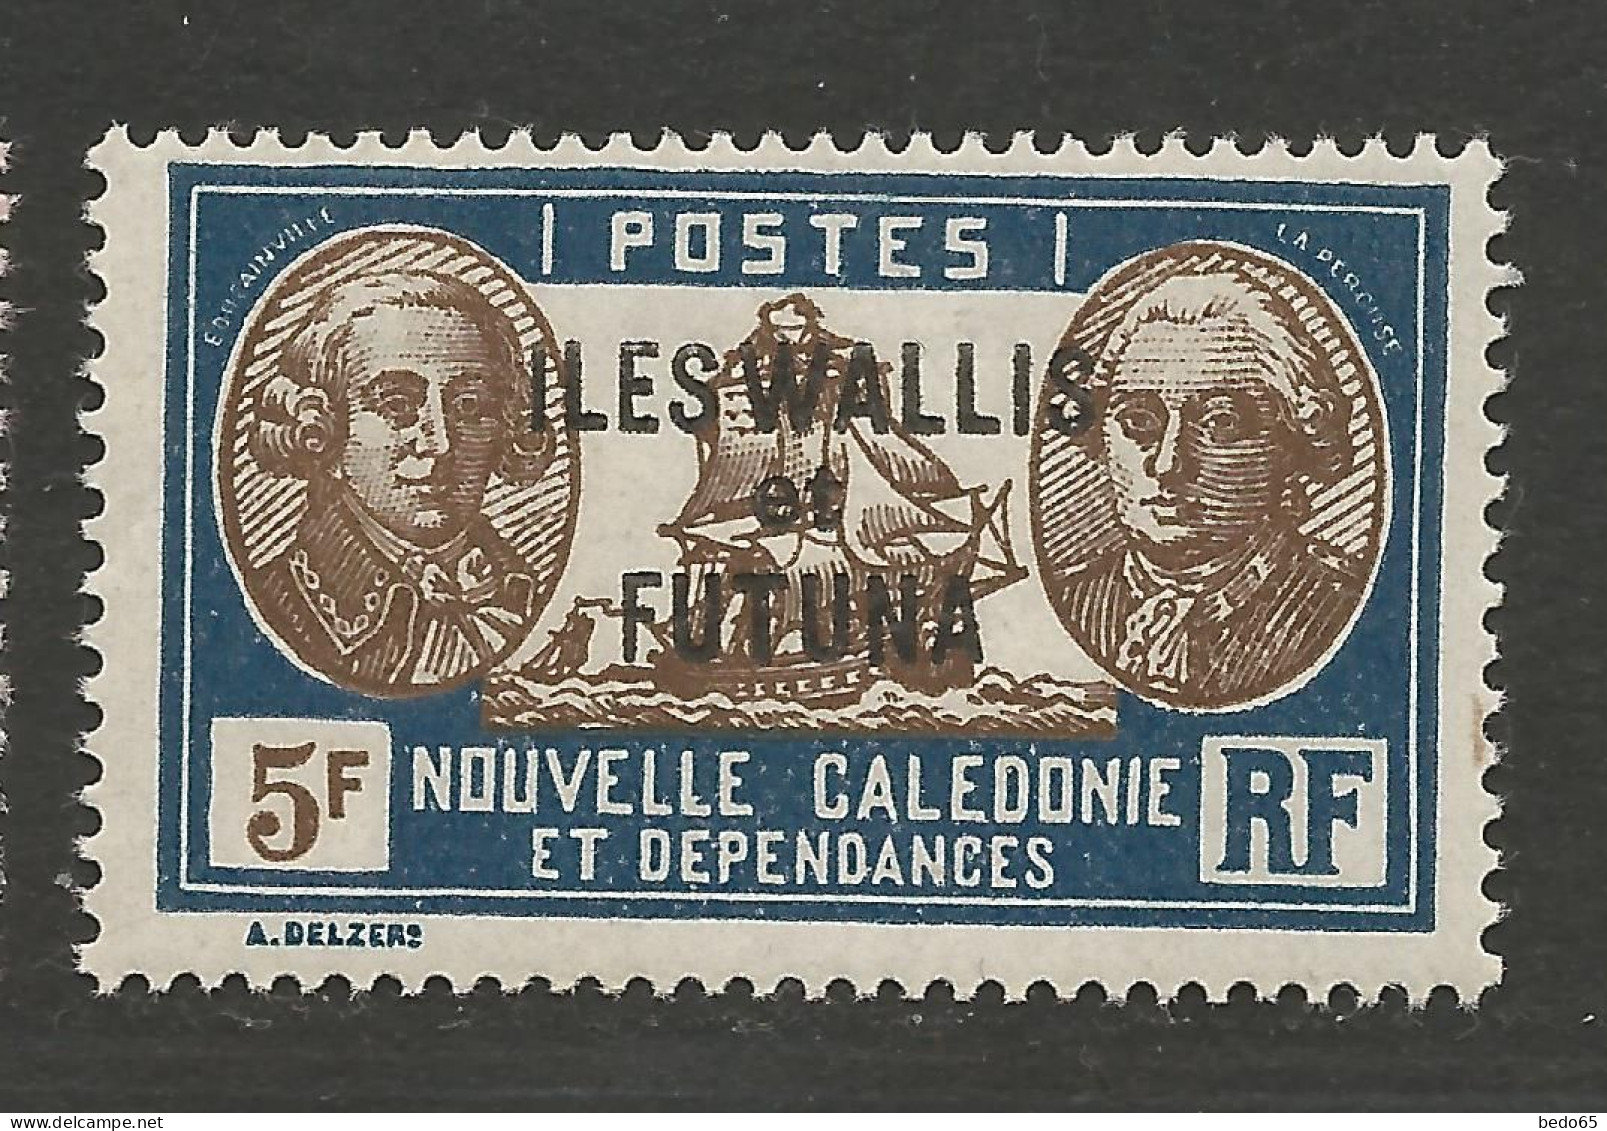 WALLIS ET FUTUNA N° 63 NEUF** SANS CHARNIERE  / Hingeless  / MNH - Unused Stamps